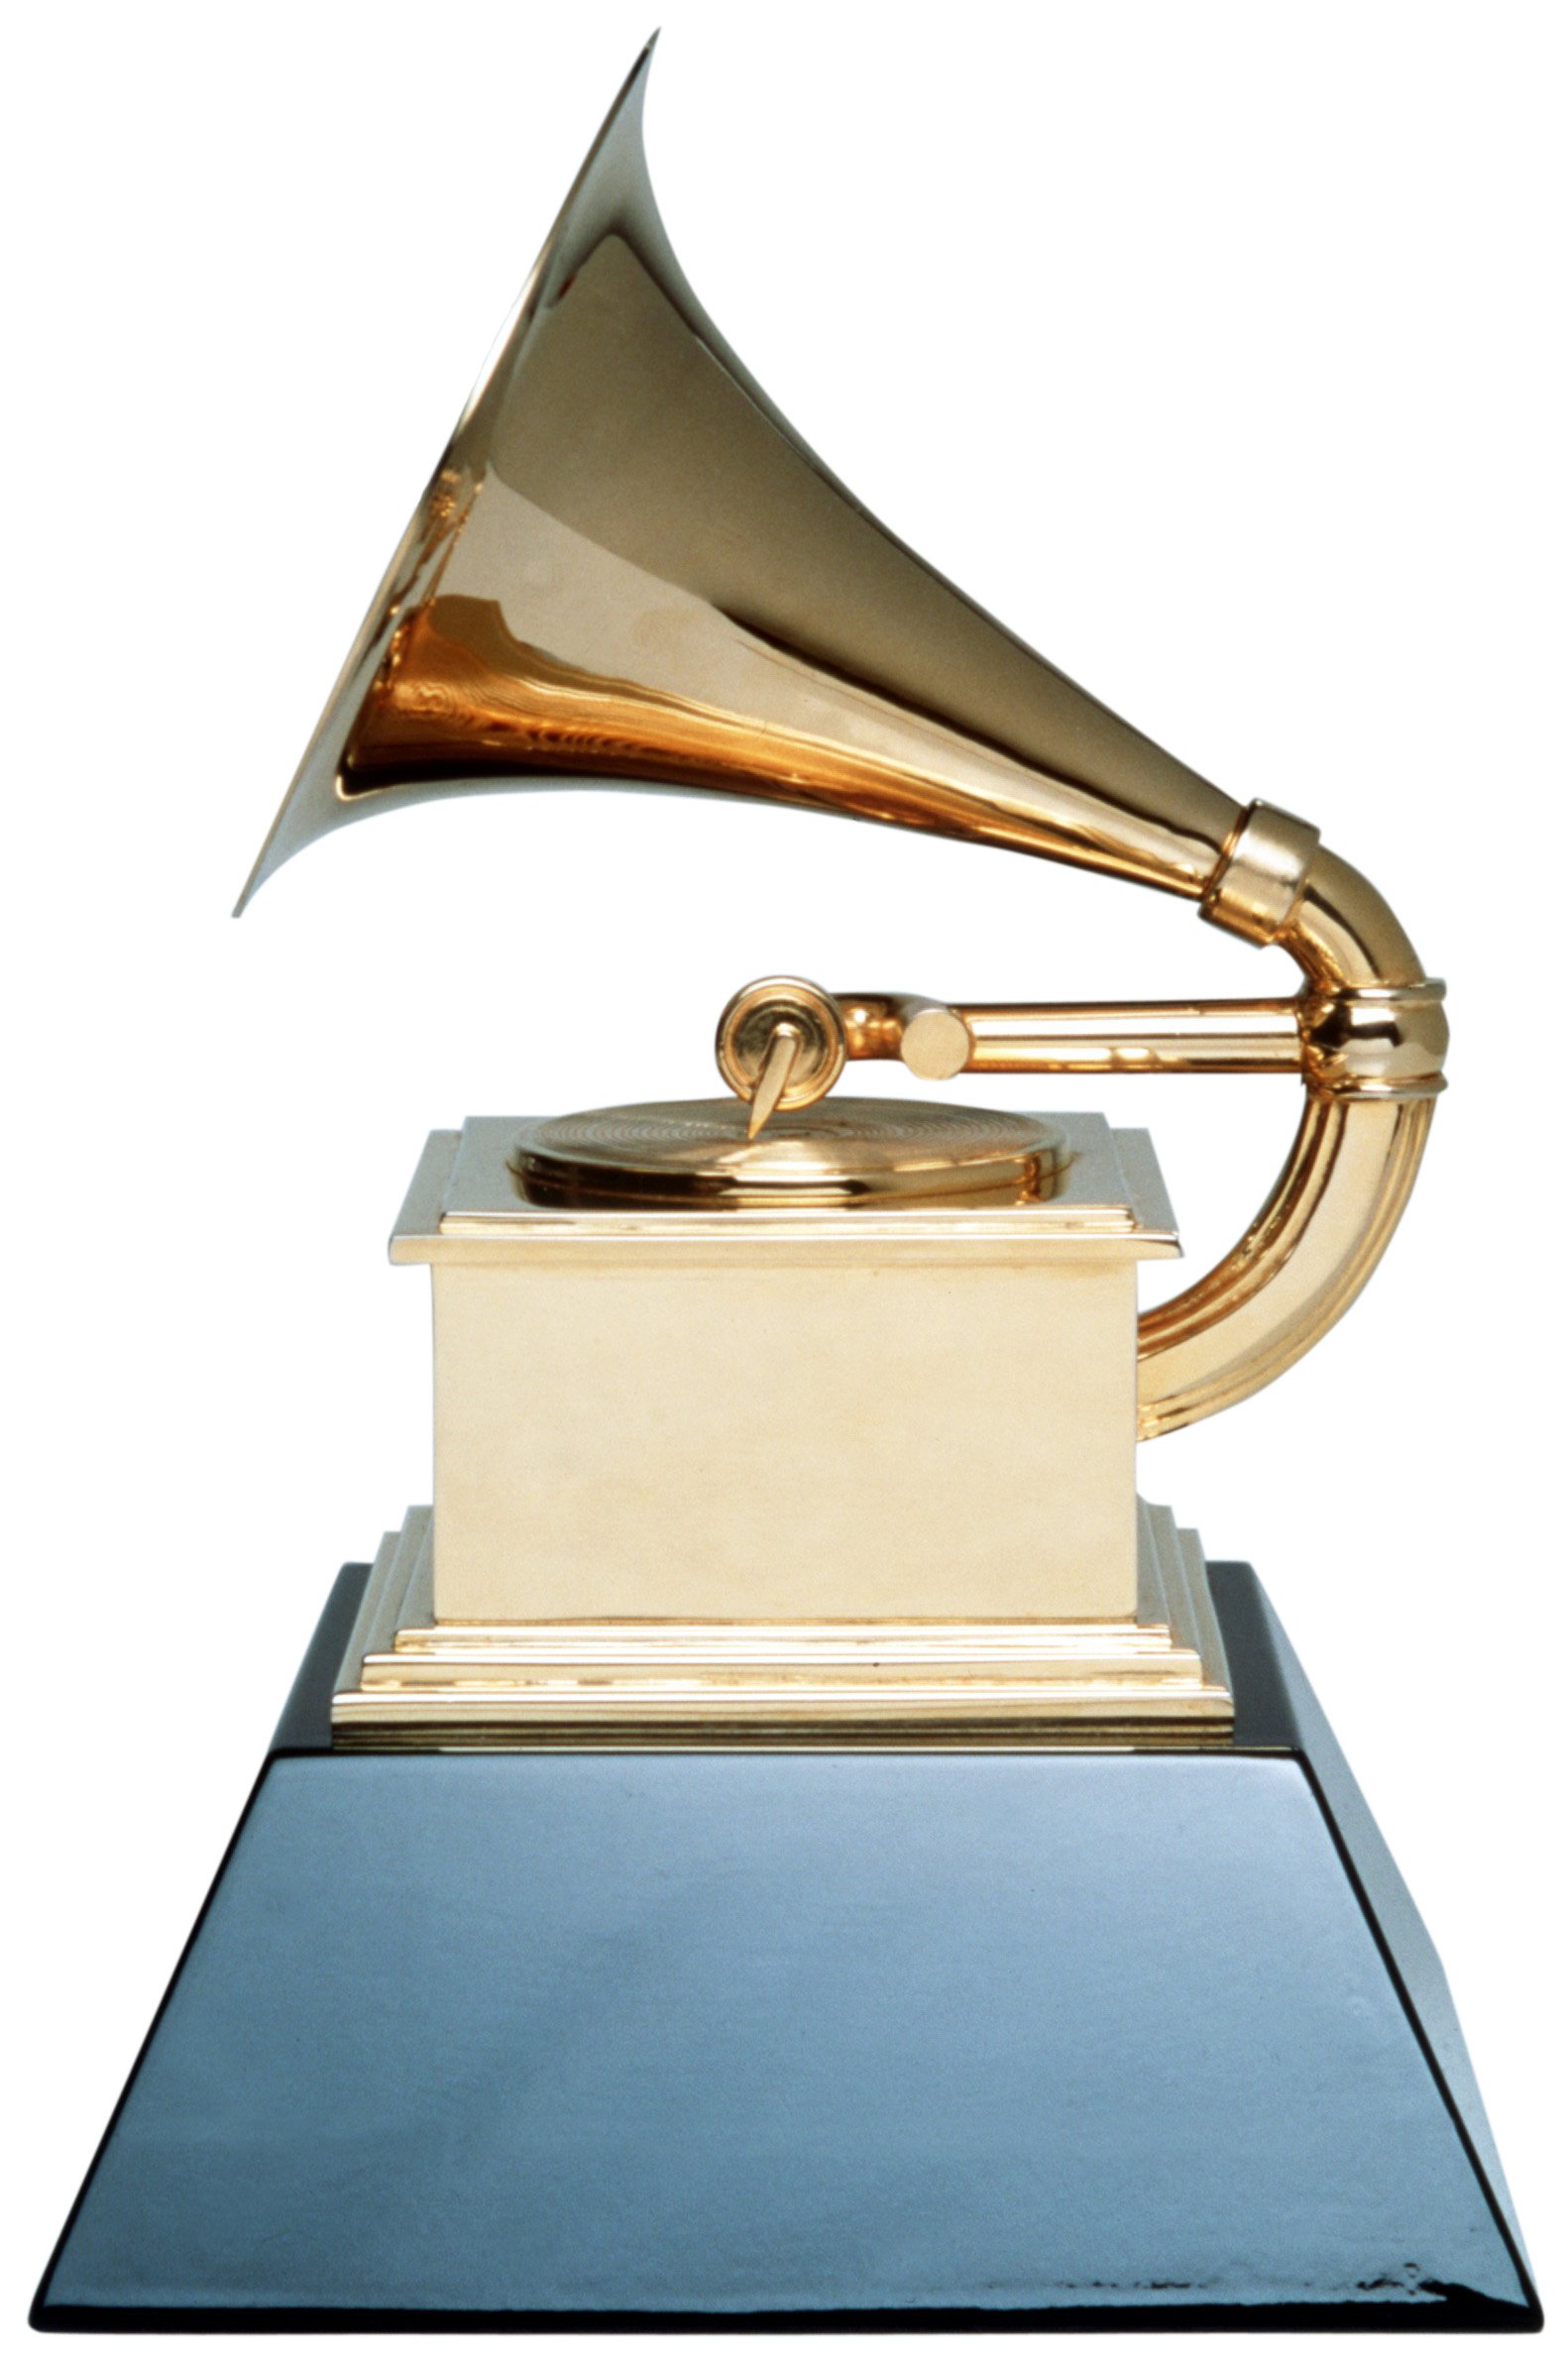 Depeche Mode, Pet Shop Boys, David Byrne & Brian Eno earn Grammy nominations